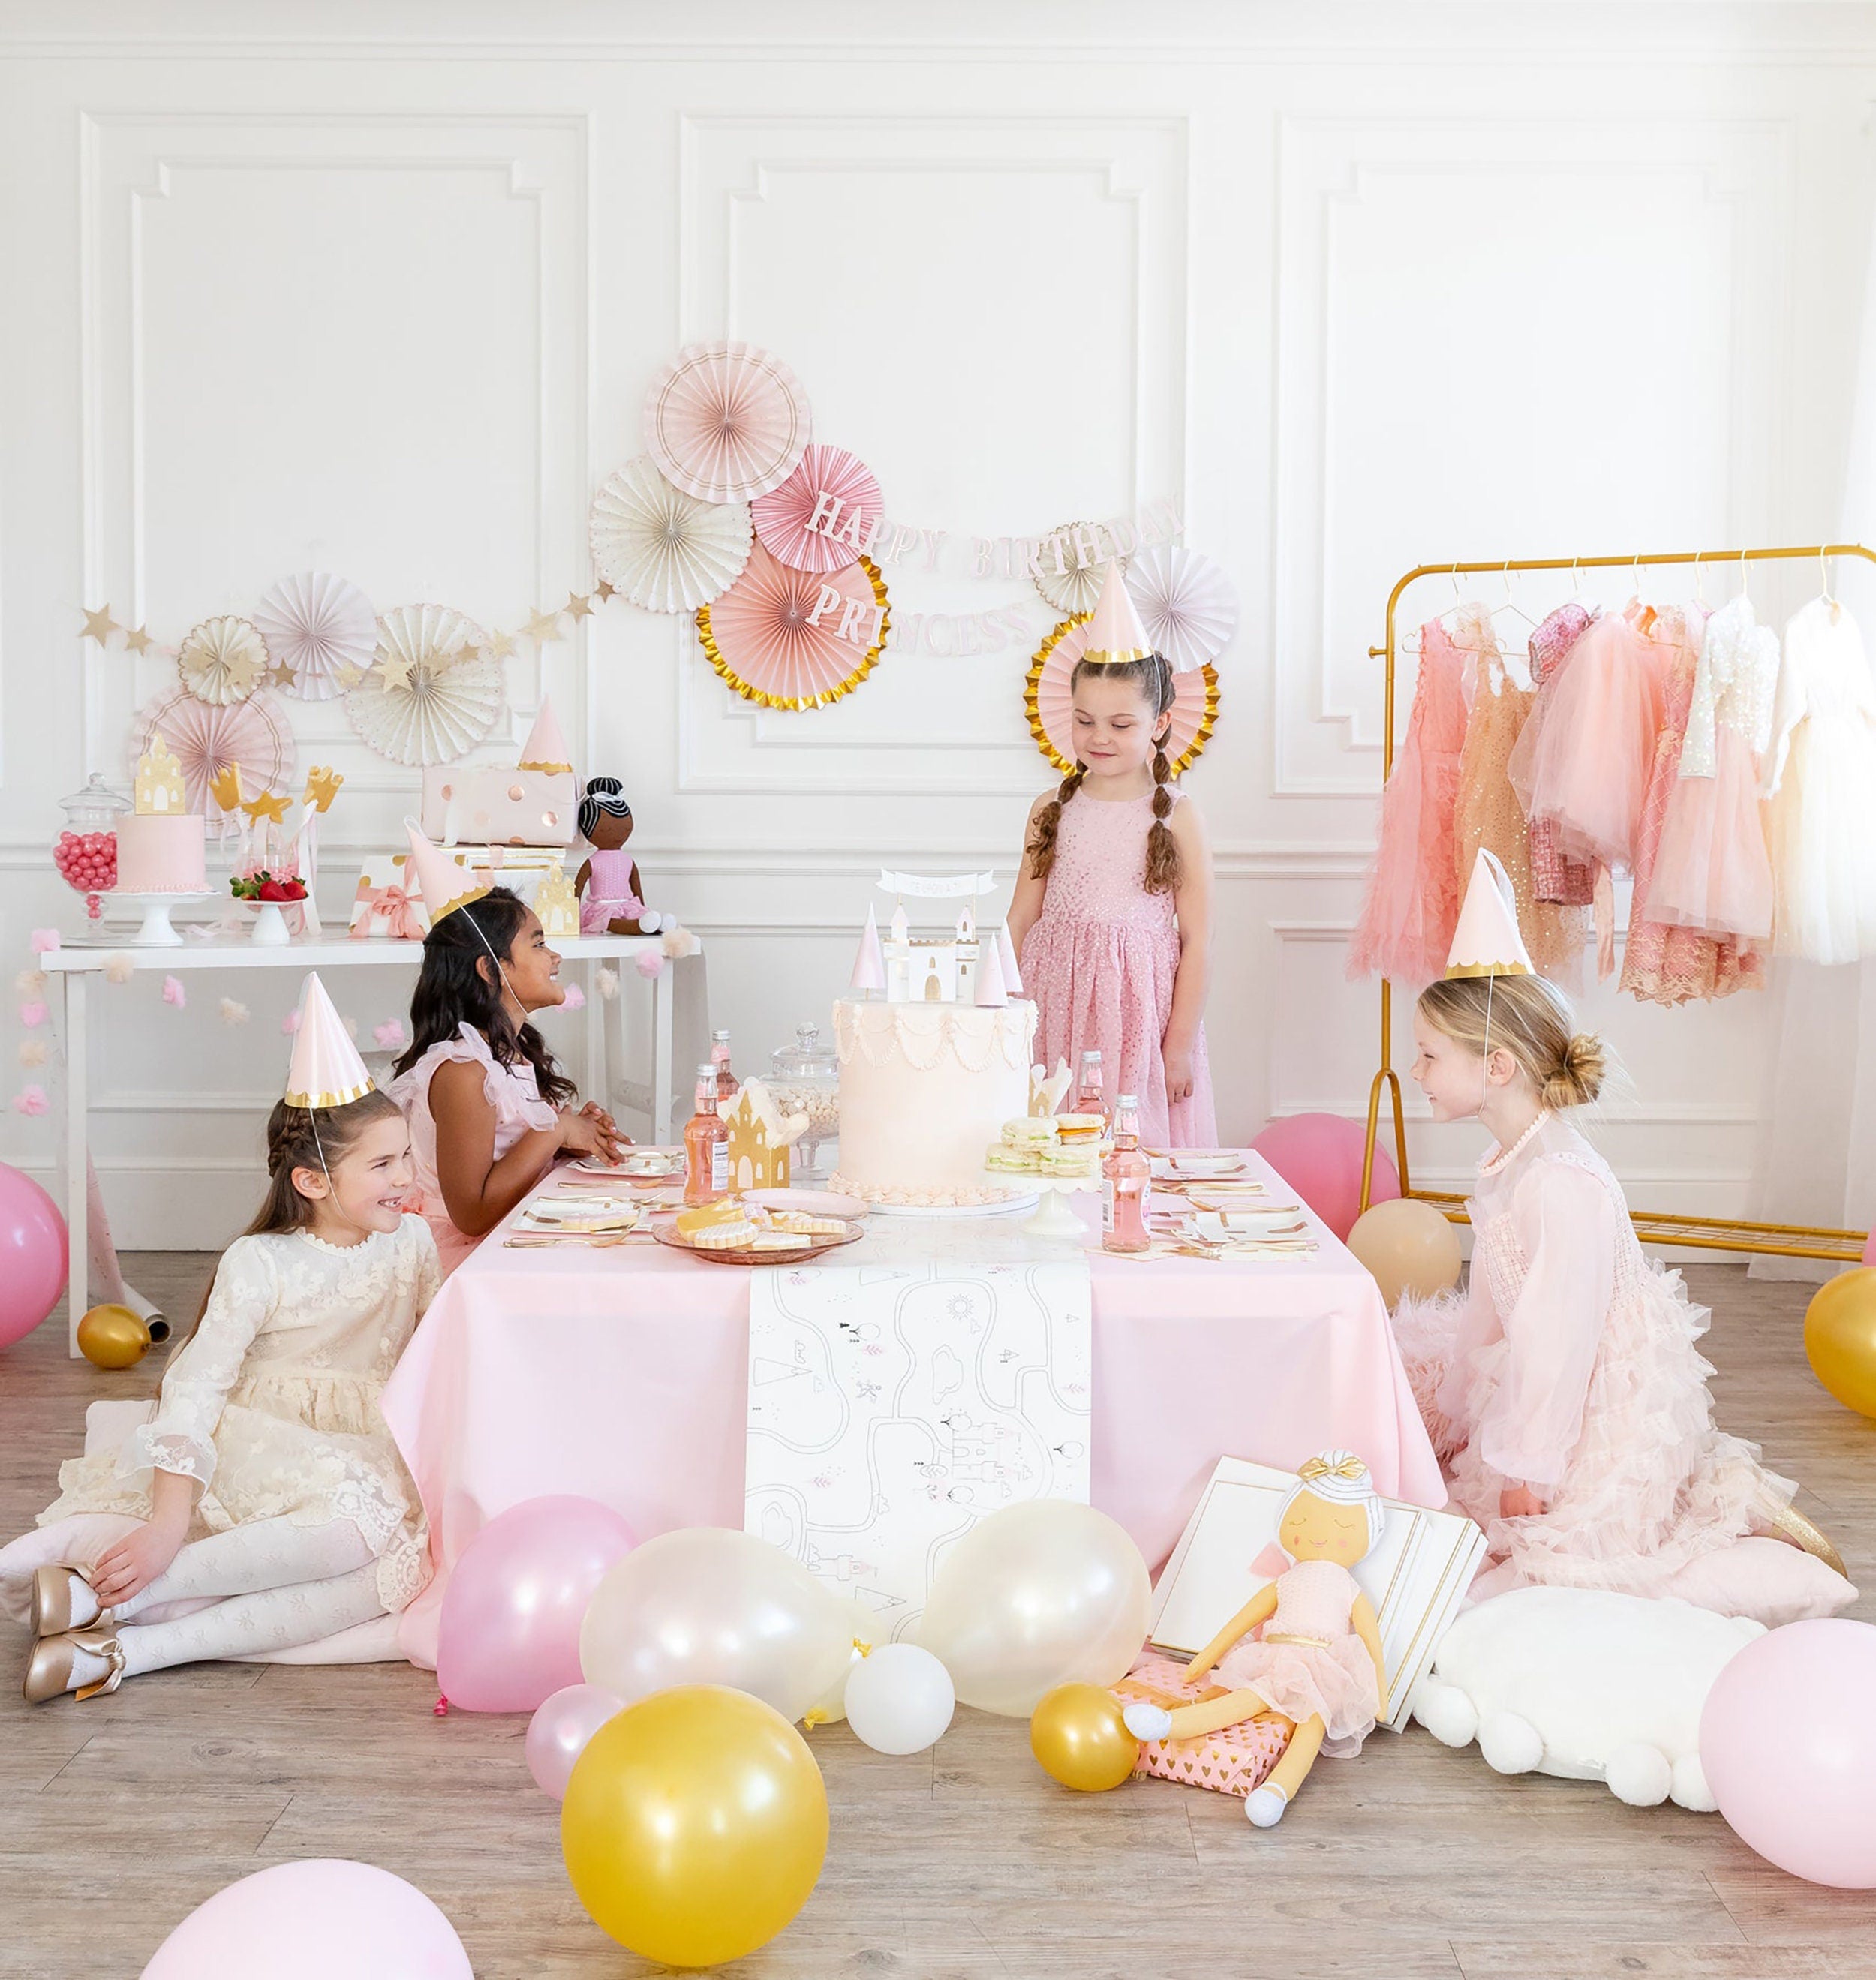 Castle Napkins | Princess Birthday Party - Princess Party Supplies - Princess Tea Party - Princess Baby Shower - Decorative Paper Napkins